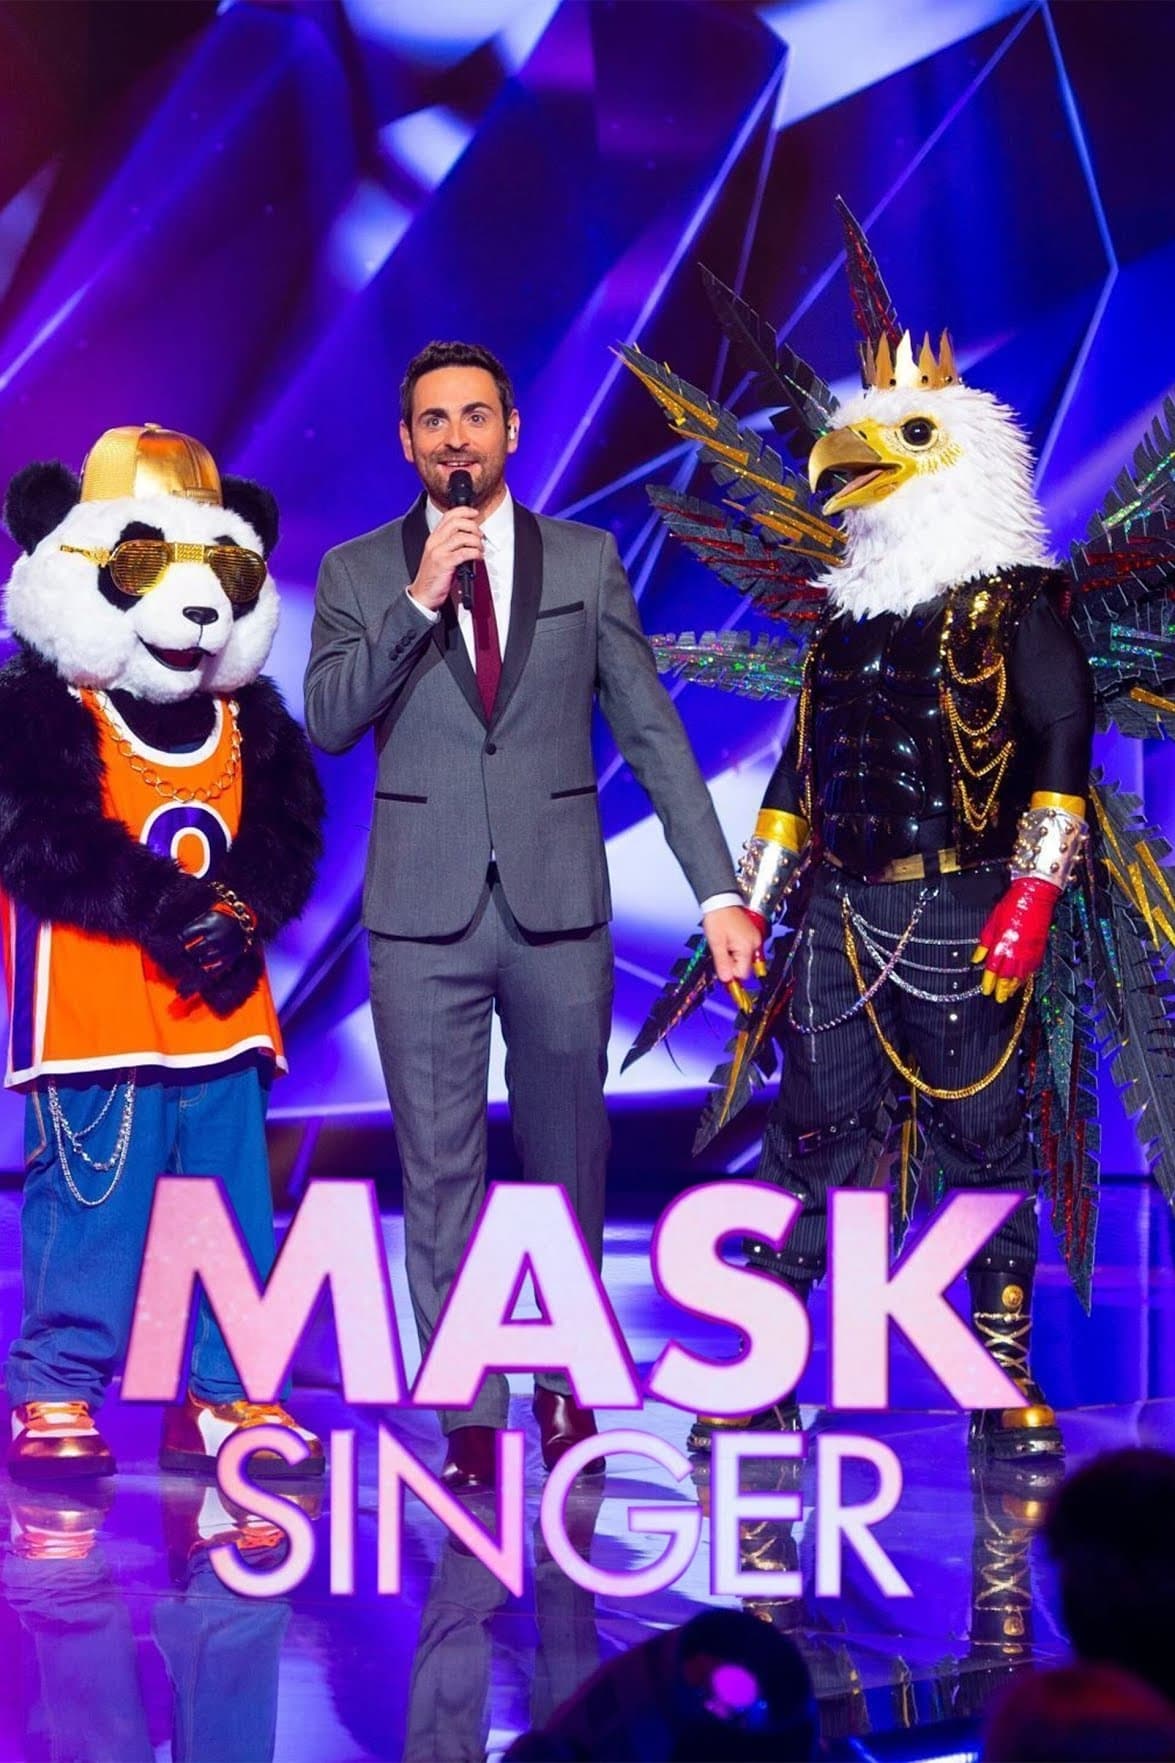 Mask Singer TV Shows About Singing